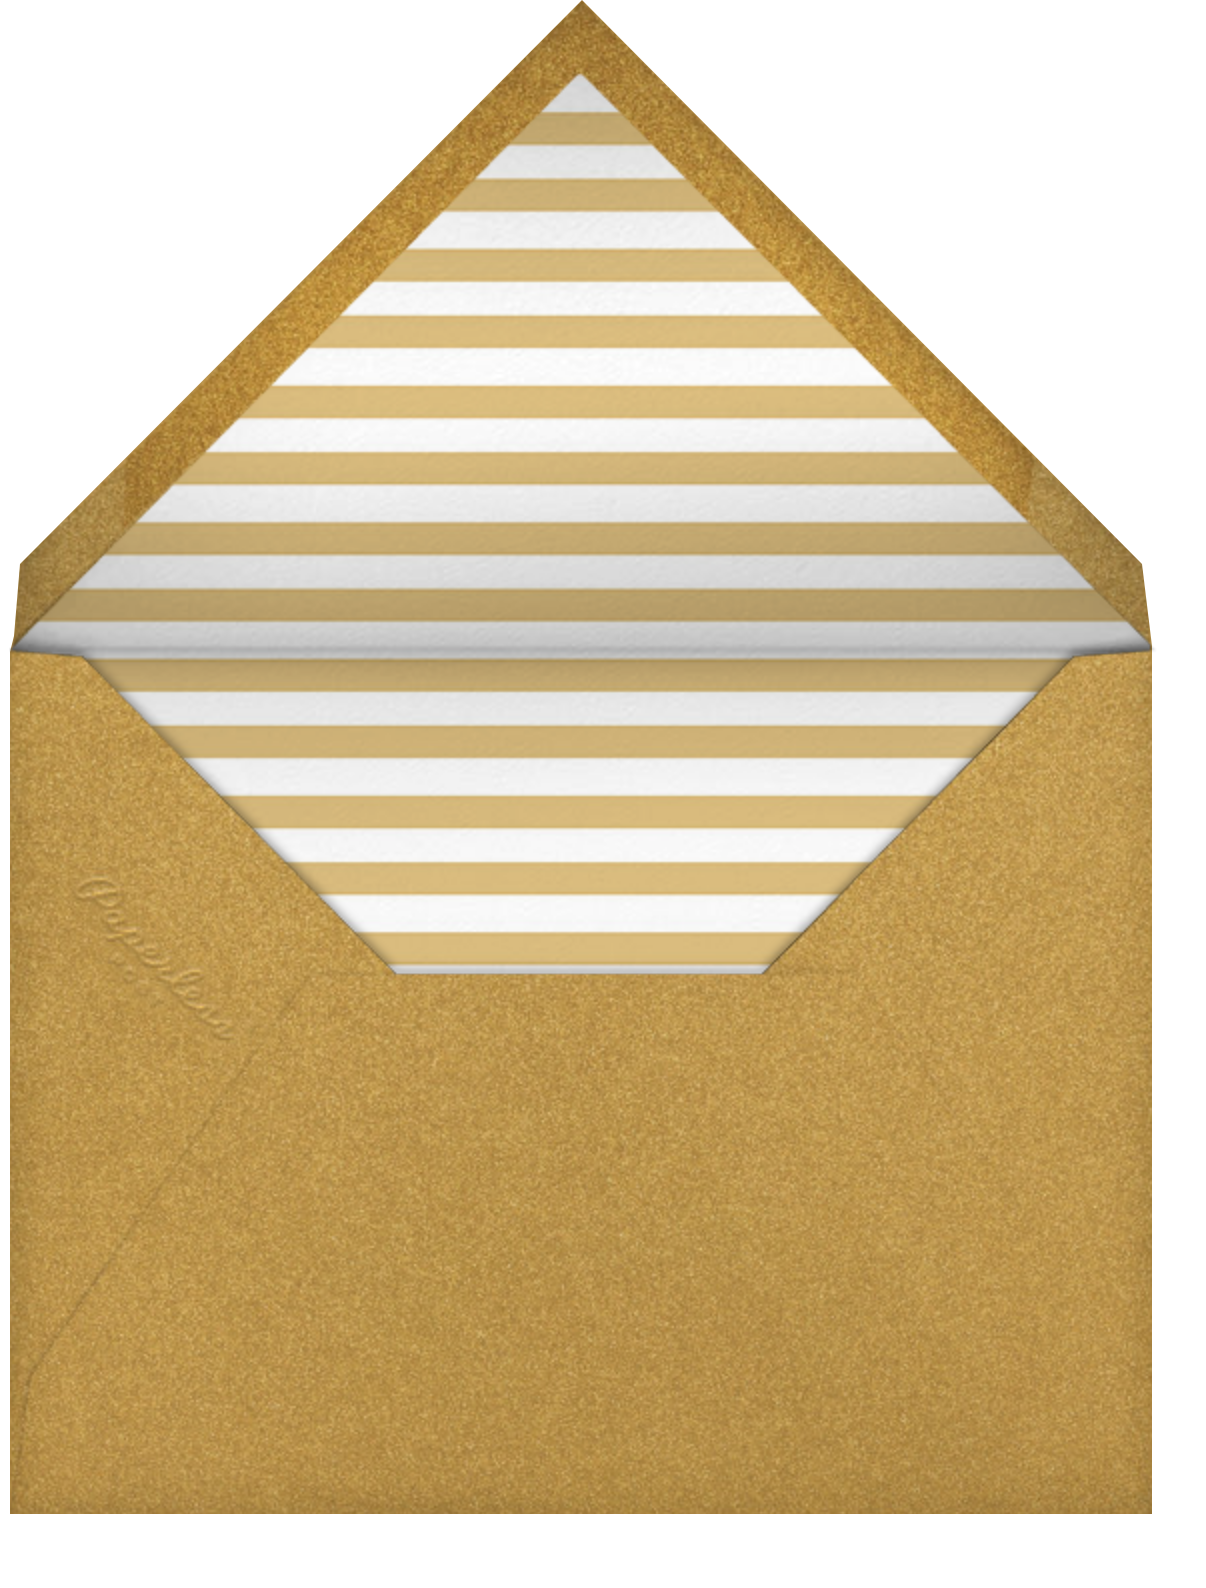 Smash Cut (Invitation) - Paperless Post - Envelope